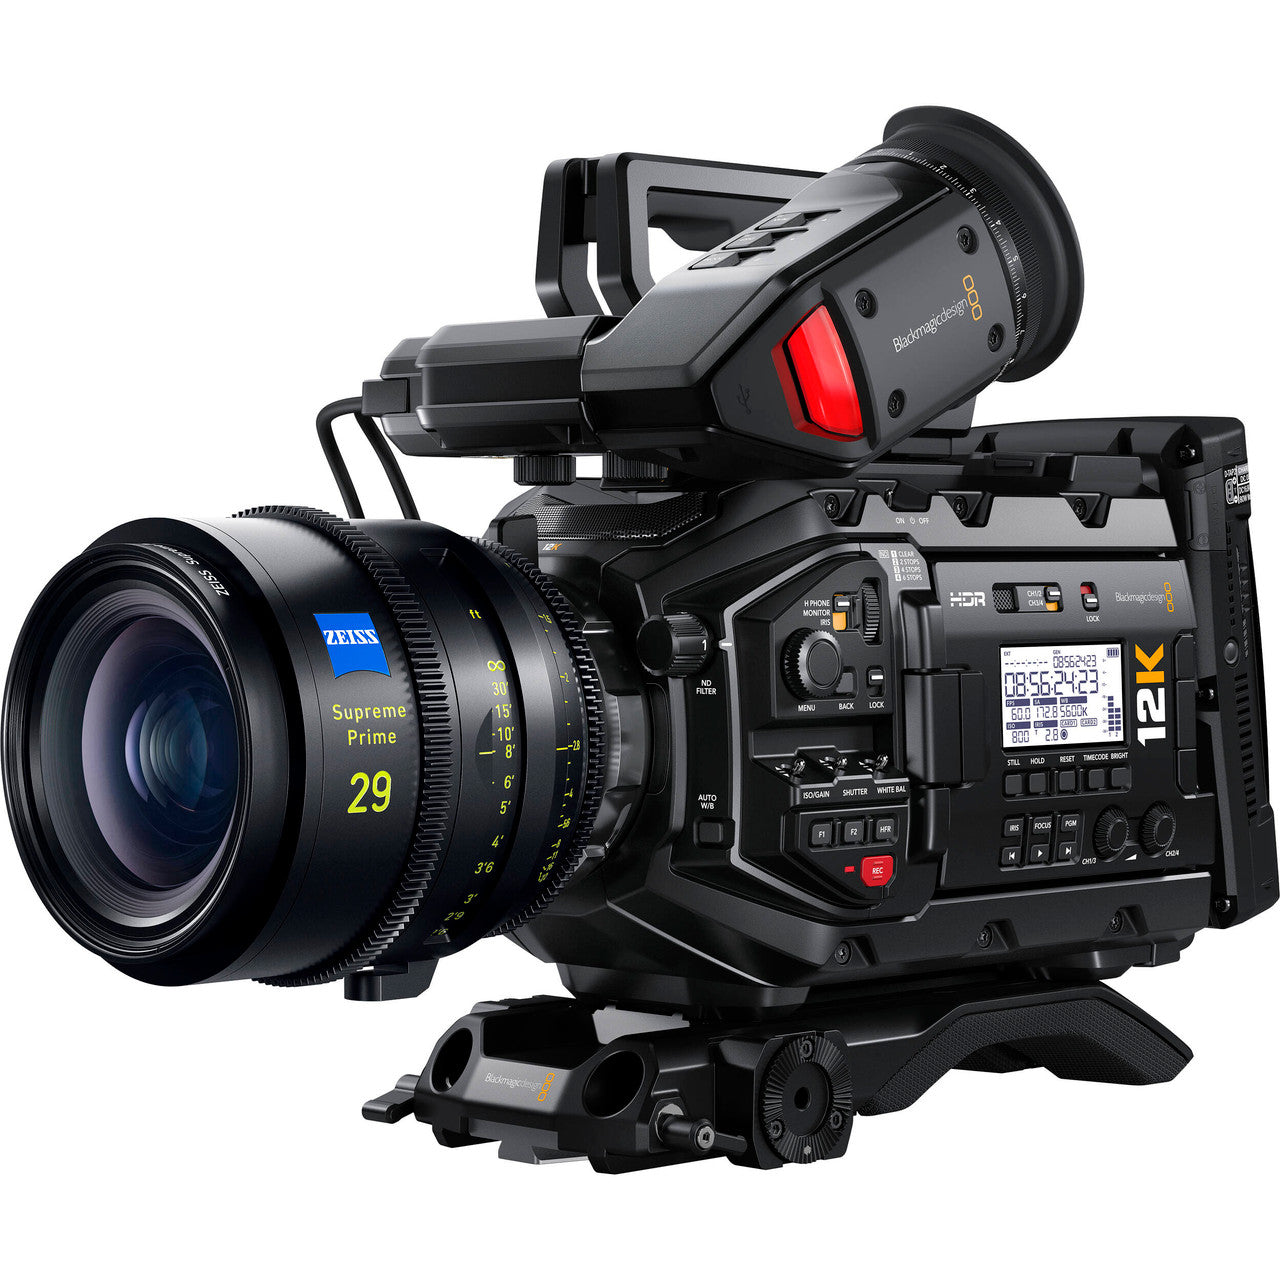 Blackmagic Design URSA Mini Pro 12K Cinema Camera with Cinematic Super 35 Sensor, Body Only